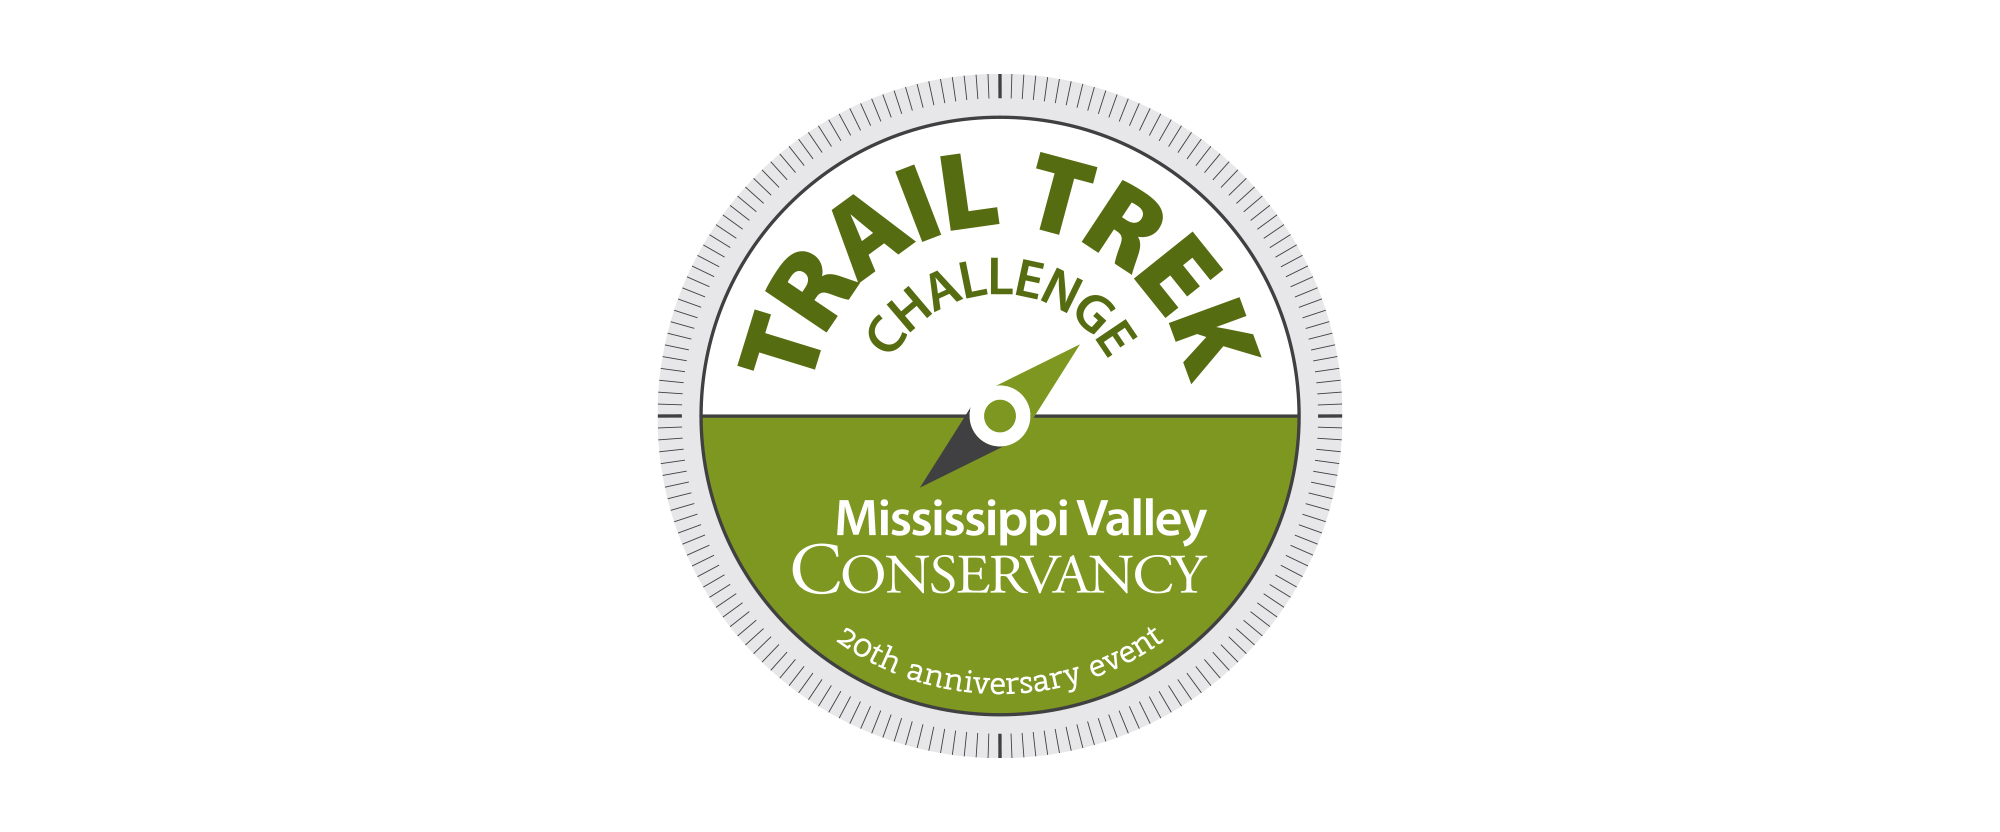 trail trek challenge logo